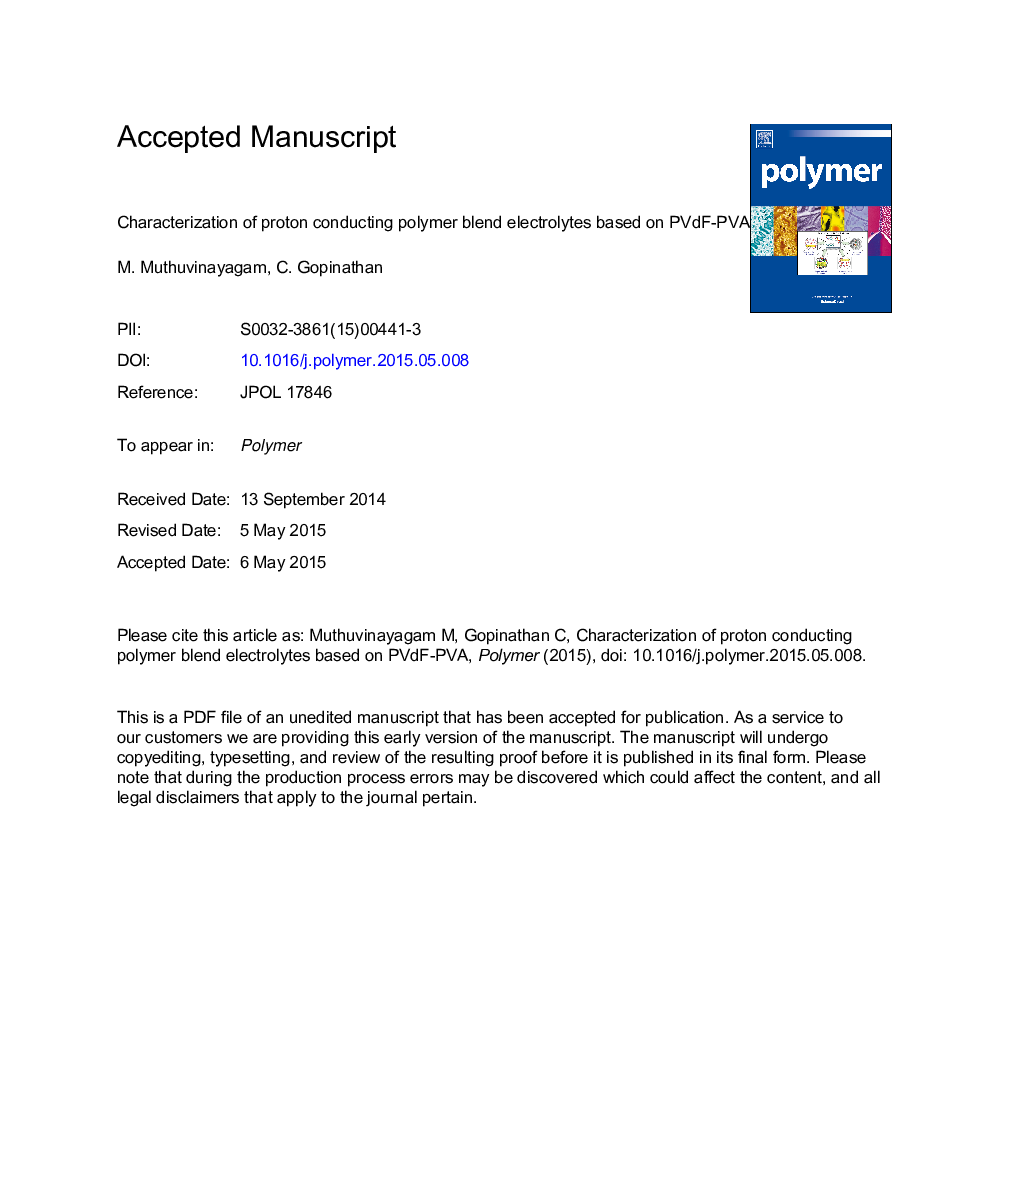 Characterization of proton conducting polymer blend electrolytes based on PVdF-PVA